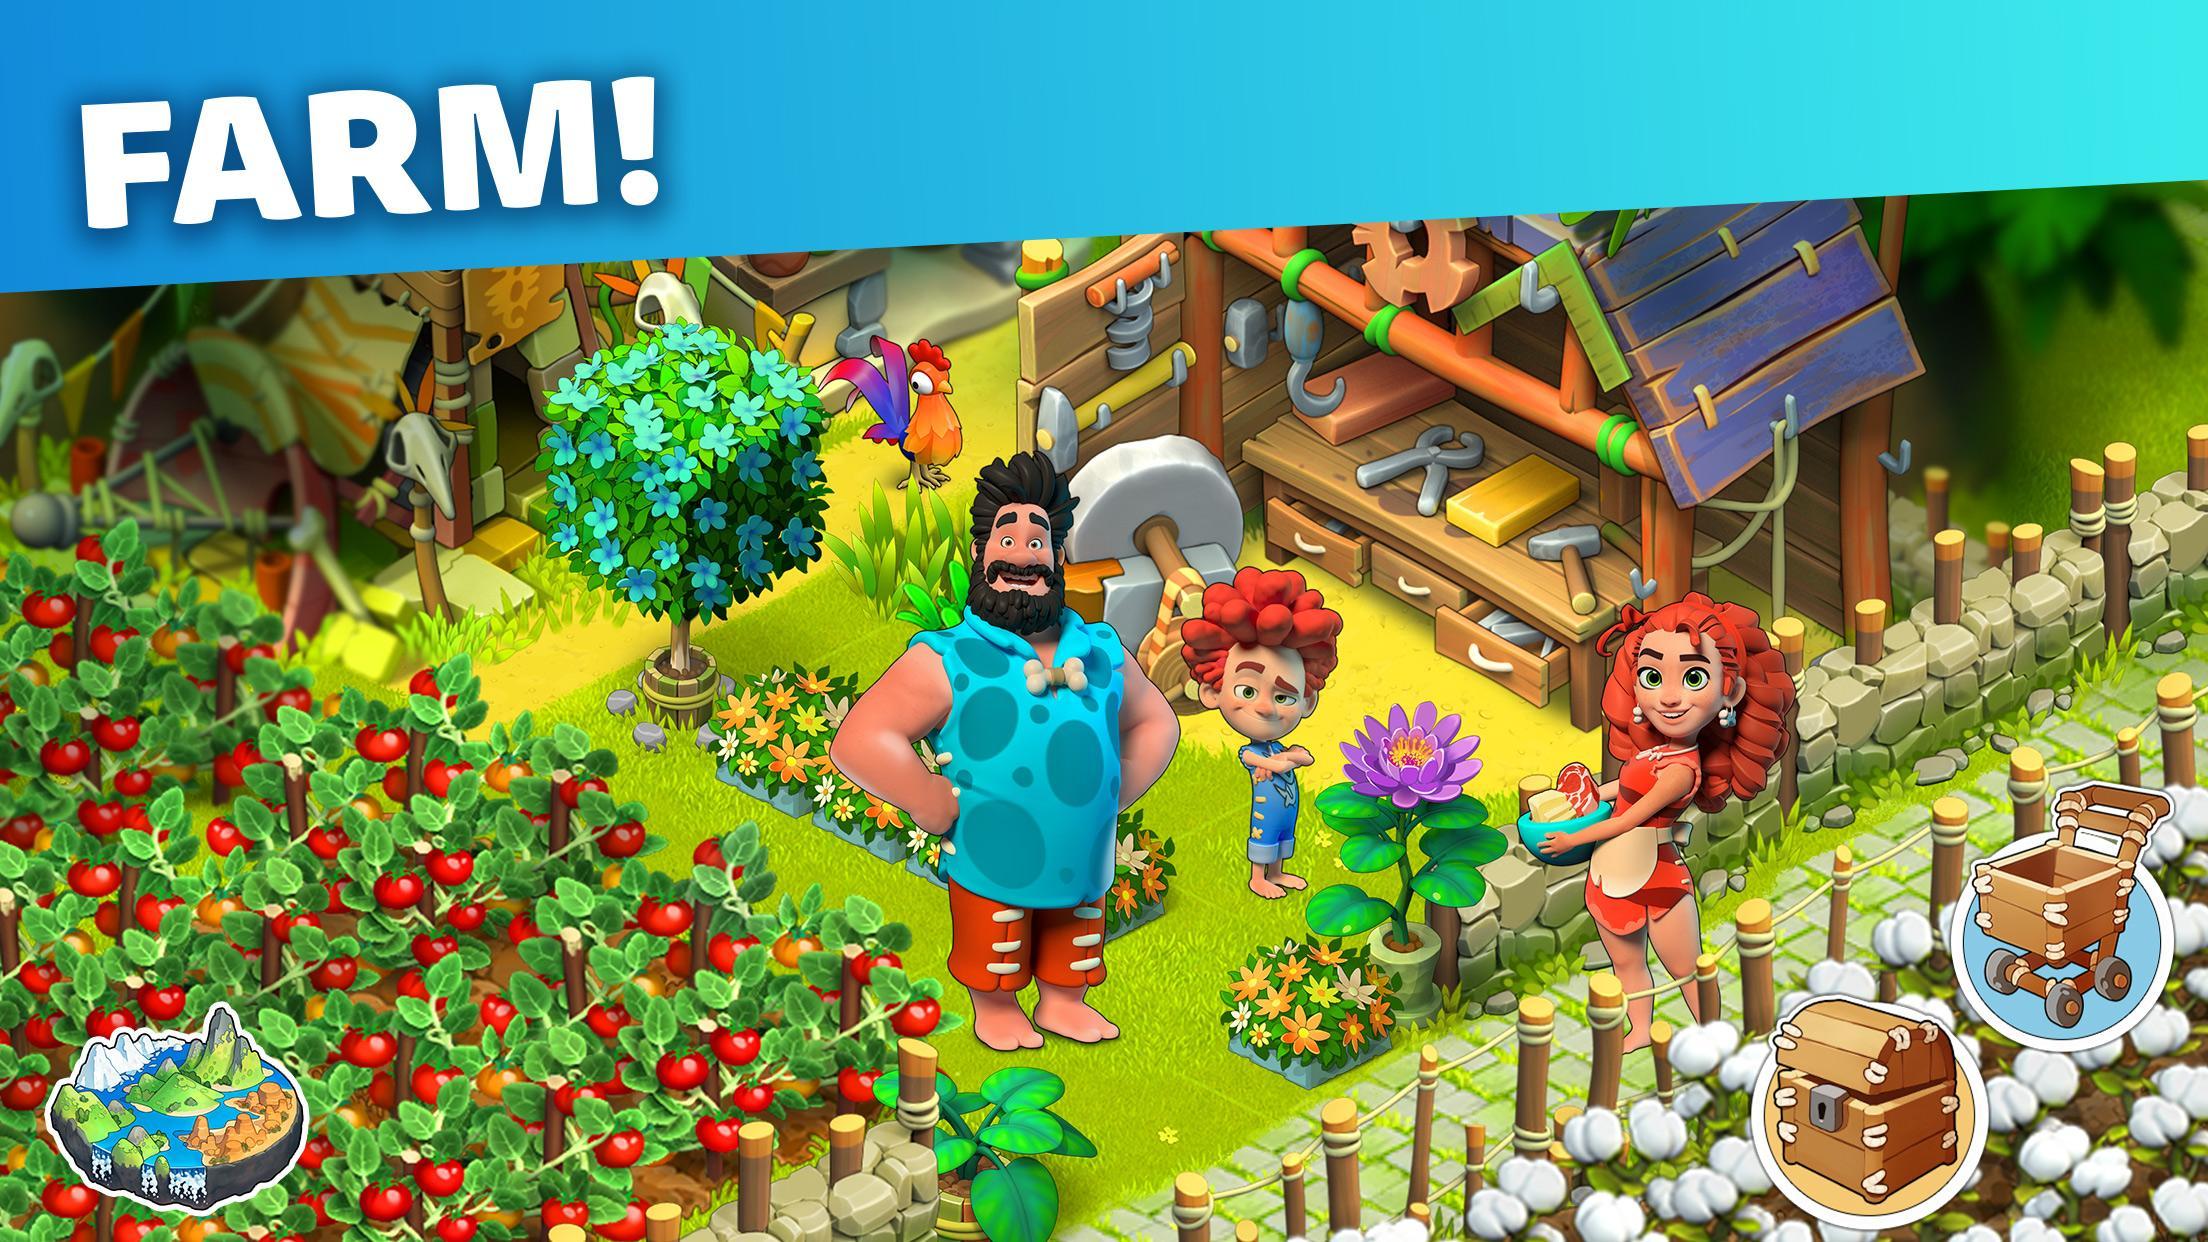 Family Island™ - Farm game adventure 202016.1.10562 Screenshot 16